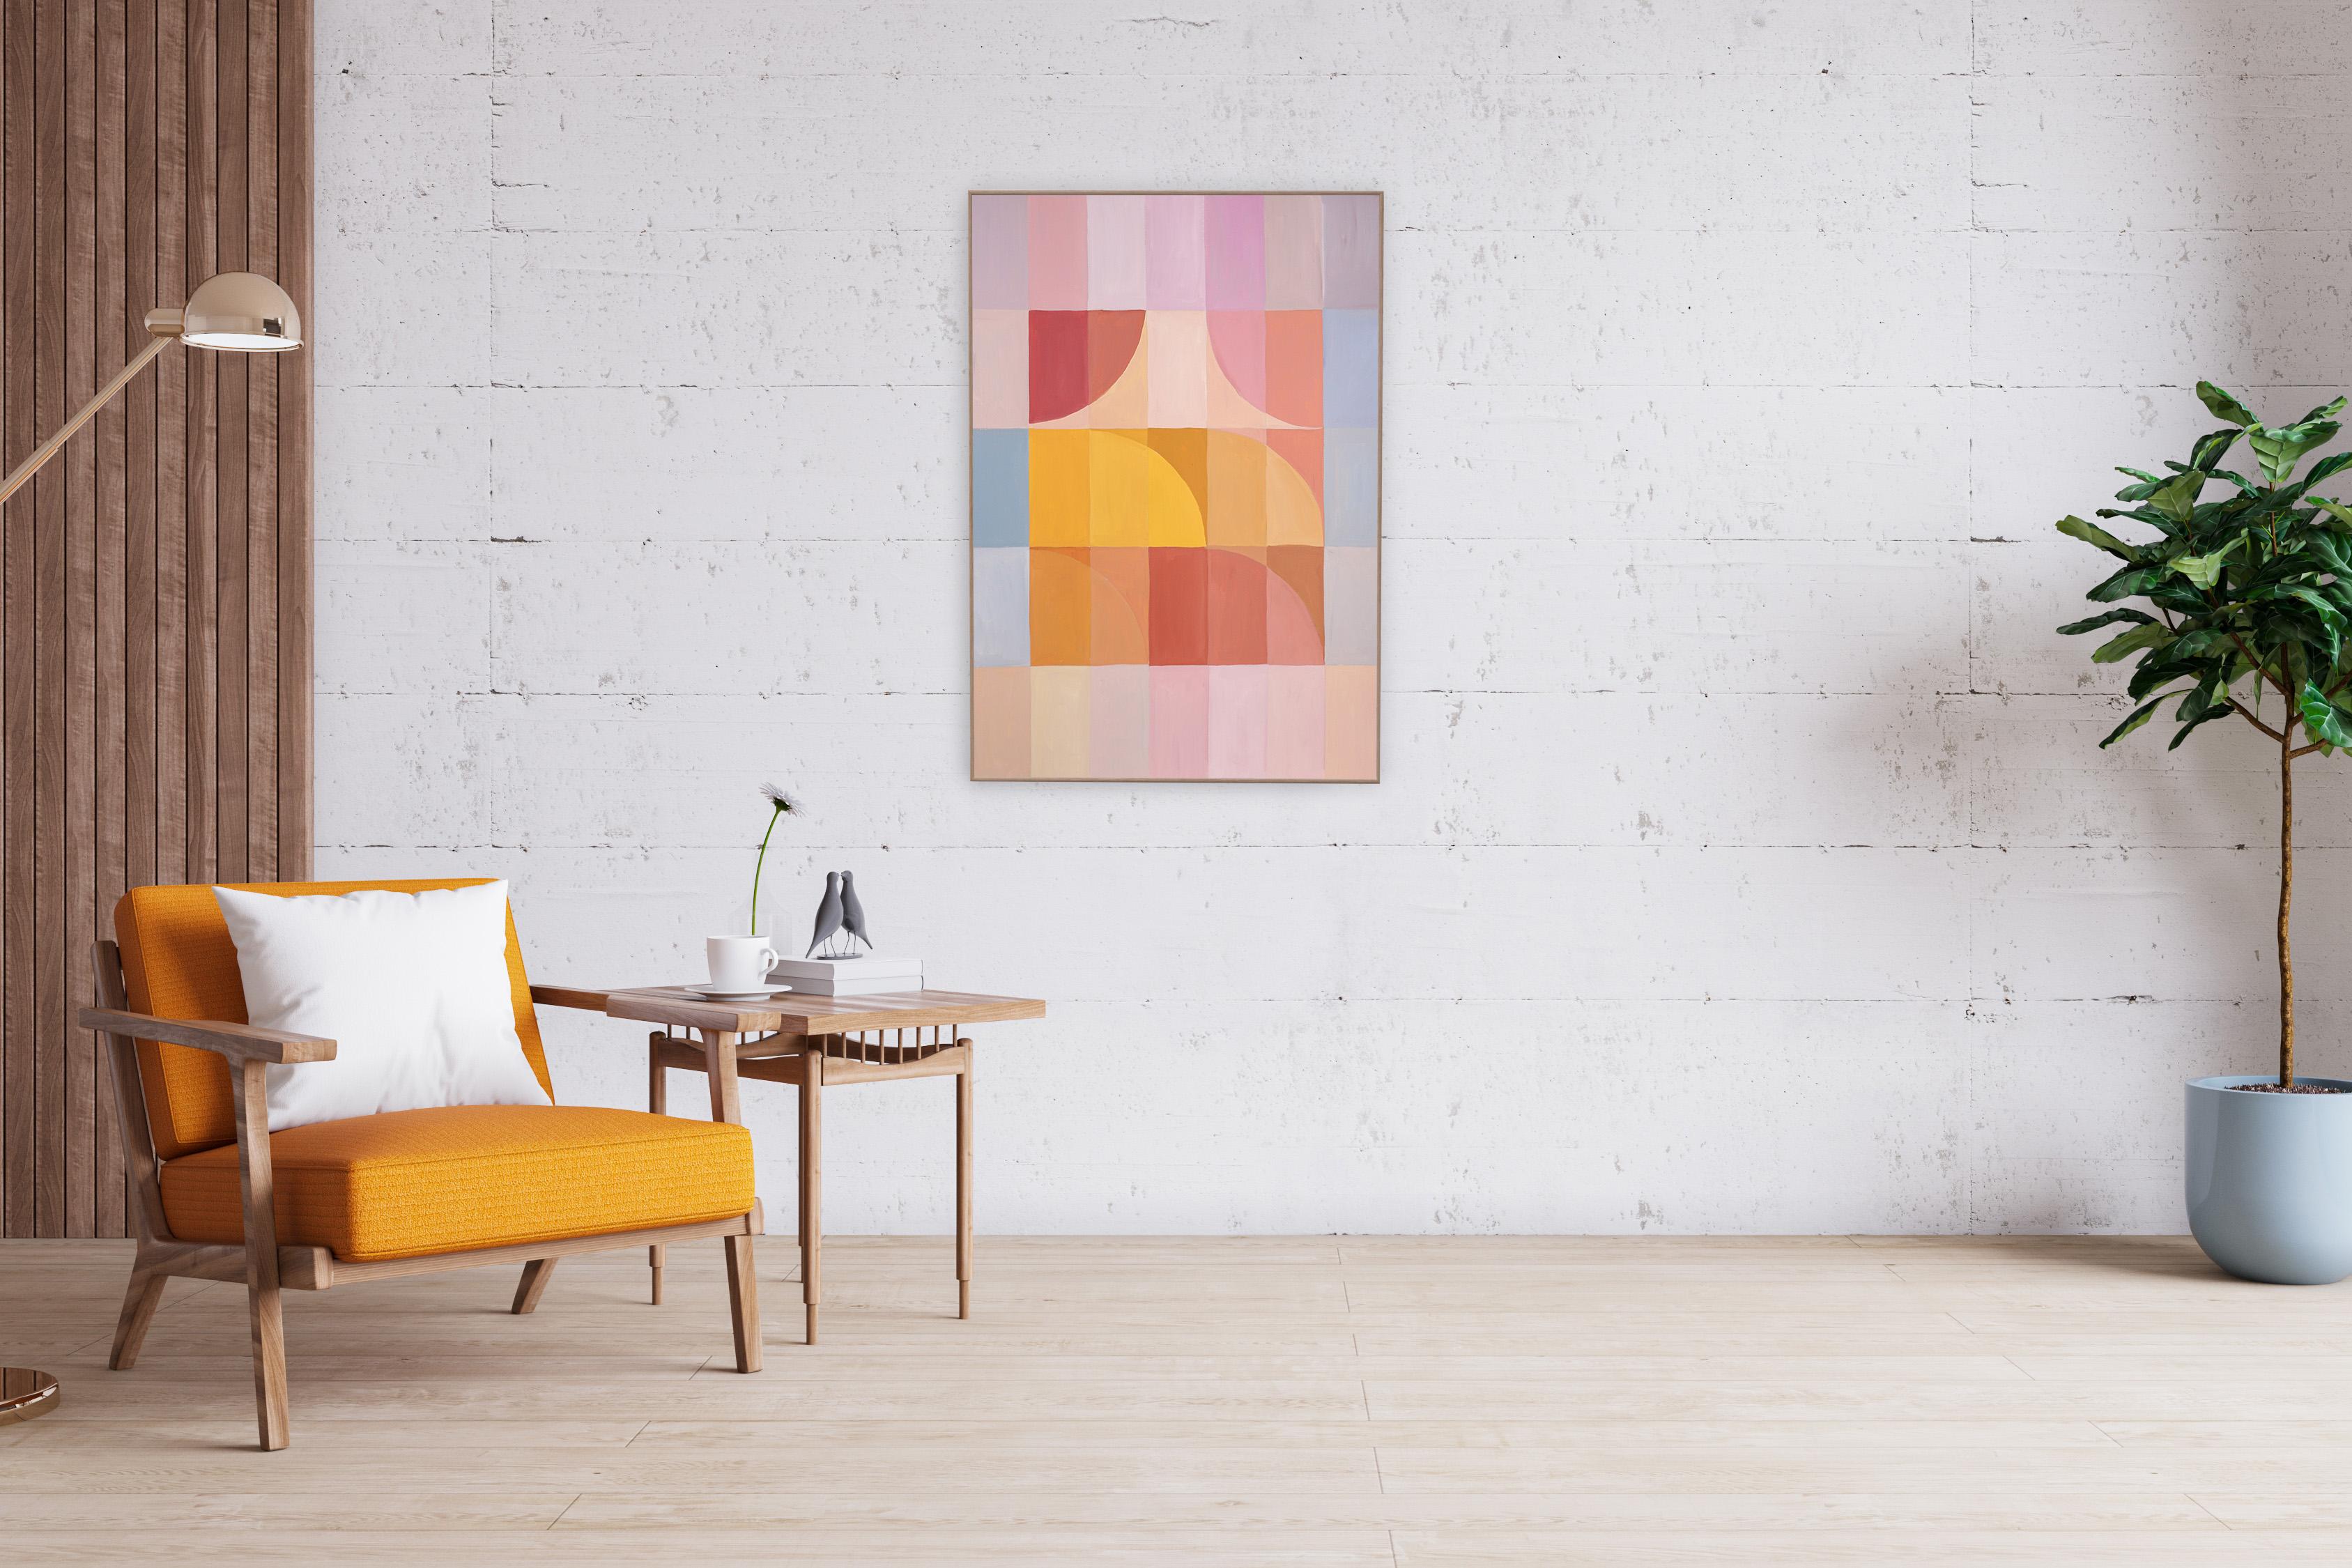 Abstract Body Through Window, Bauhaus Pattern Grid, Sandy Tones, Pale Pink   1